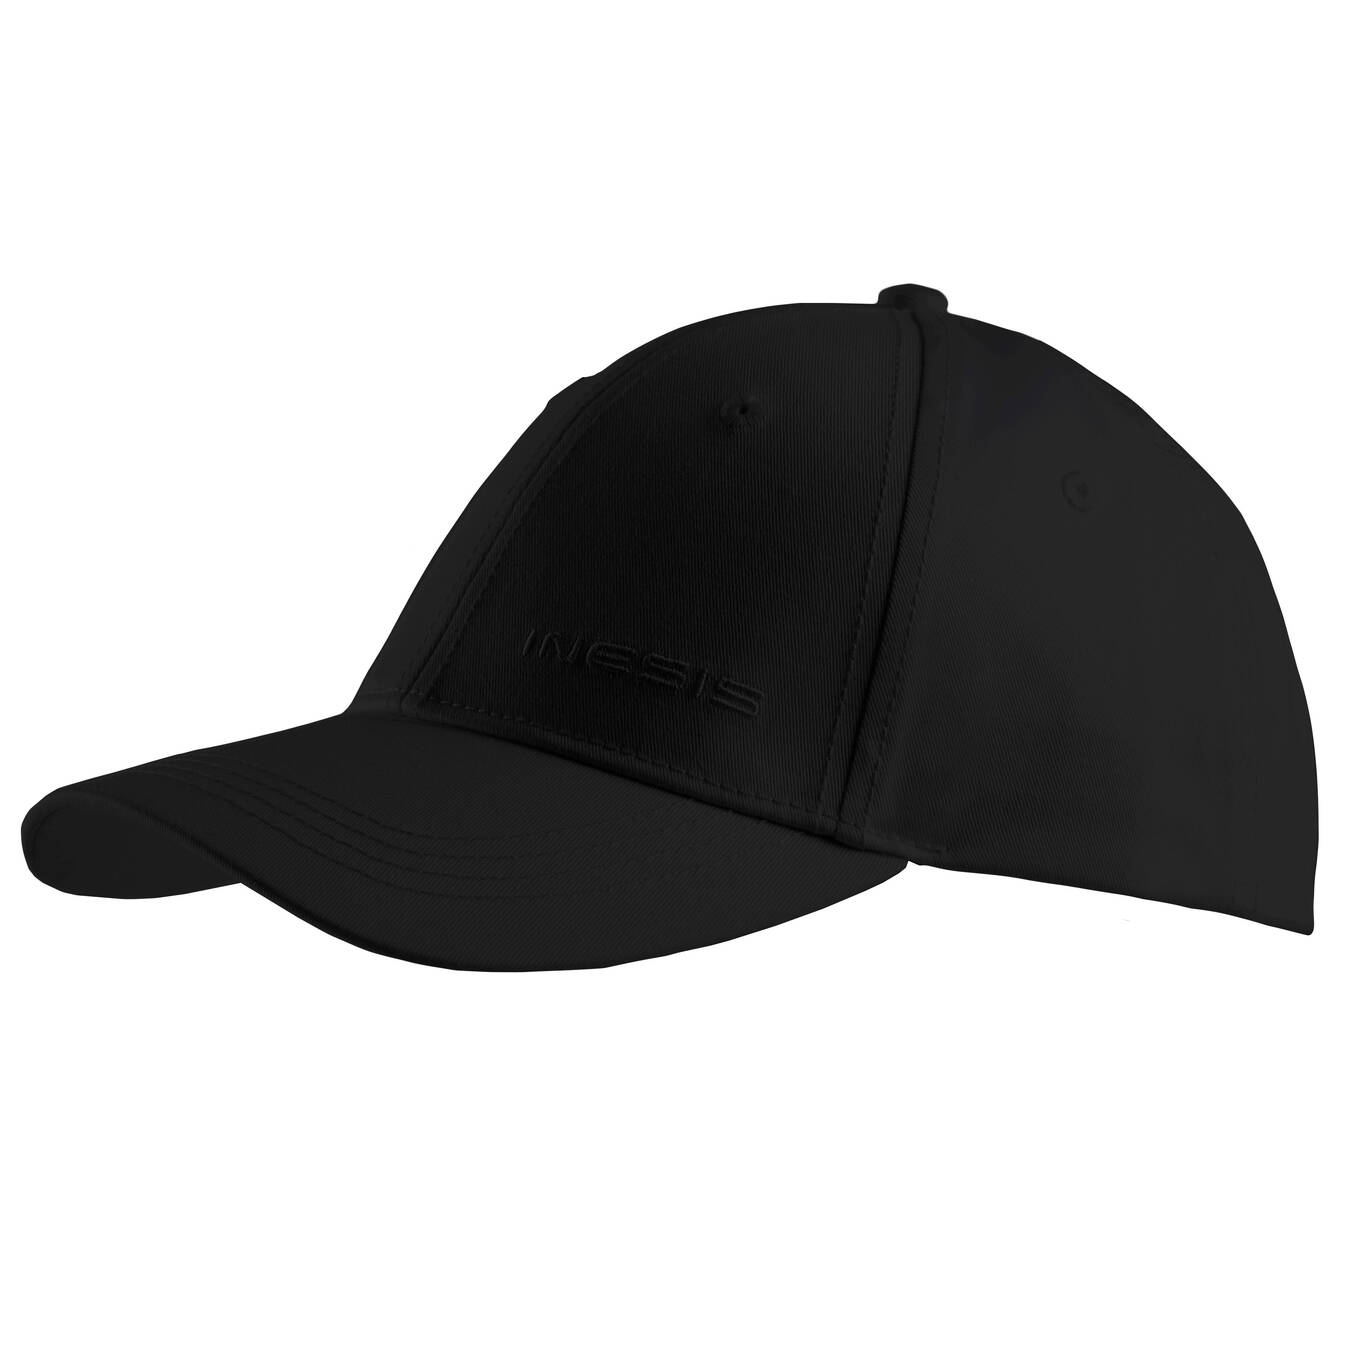 Adult's golf cap MW500 black - Decathlon